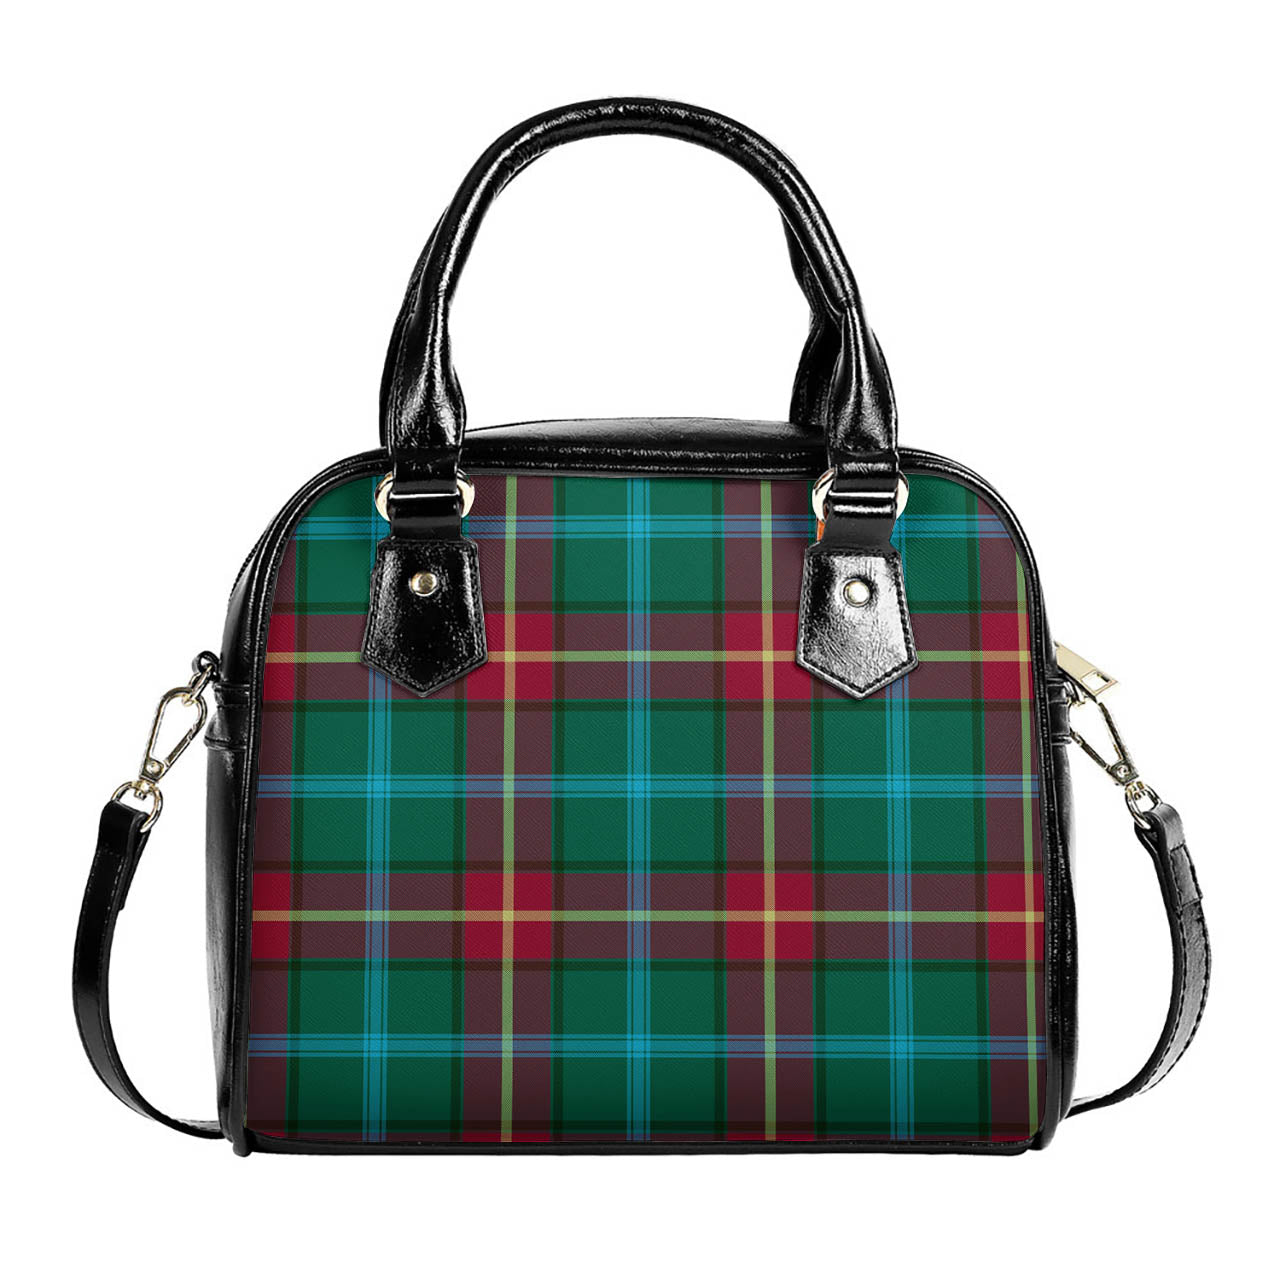 Manitoba Province Canada Tartan Shoulder Handbags One Size 6*25*22 cm - Tartanvibesclothing